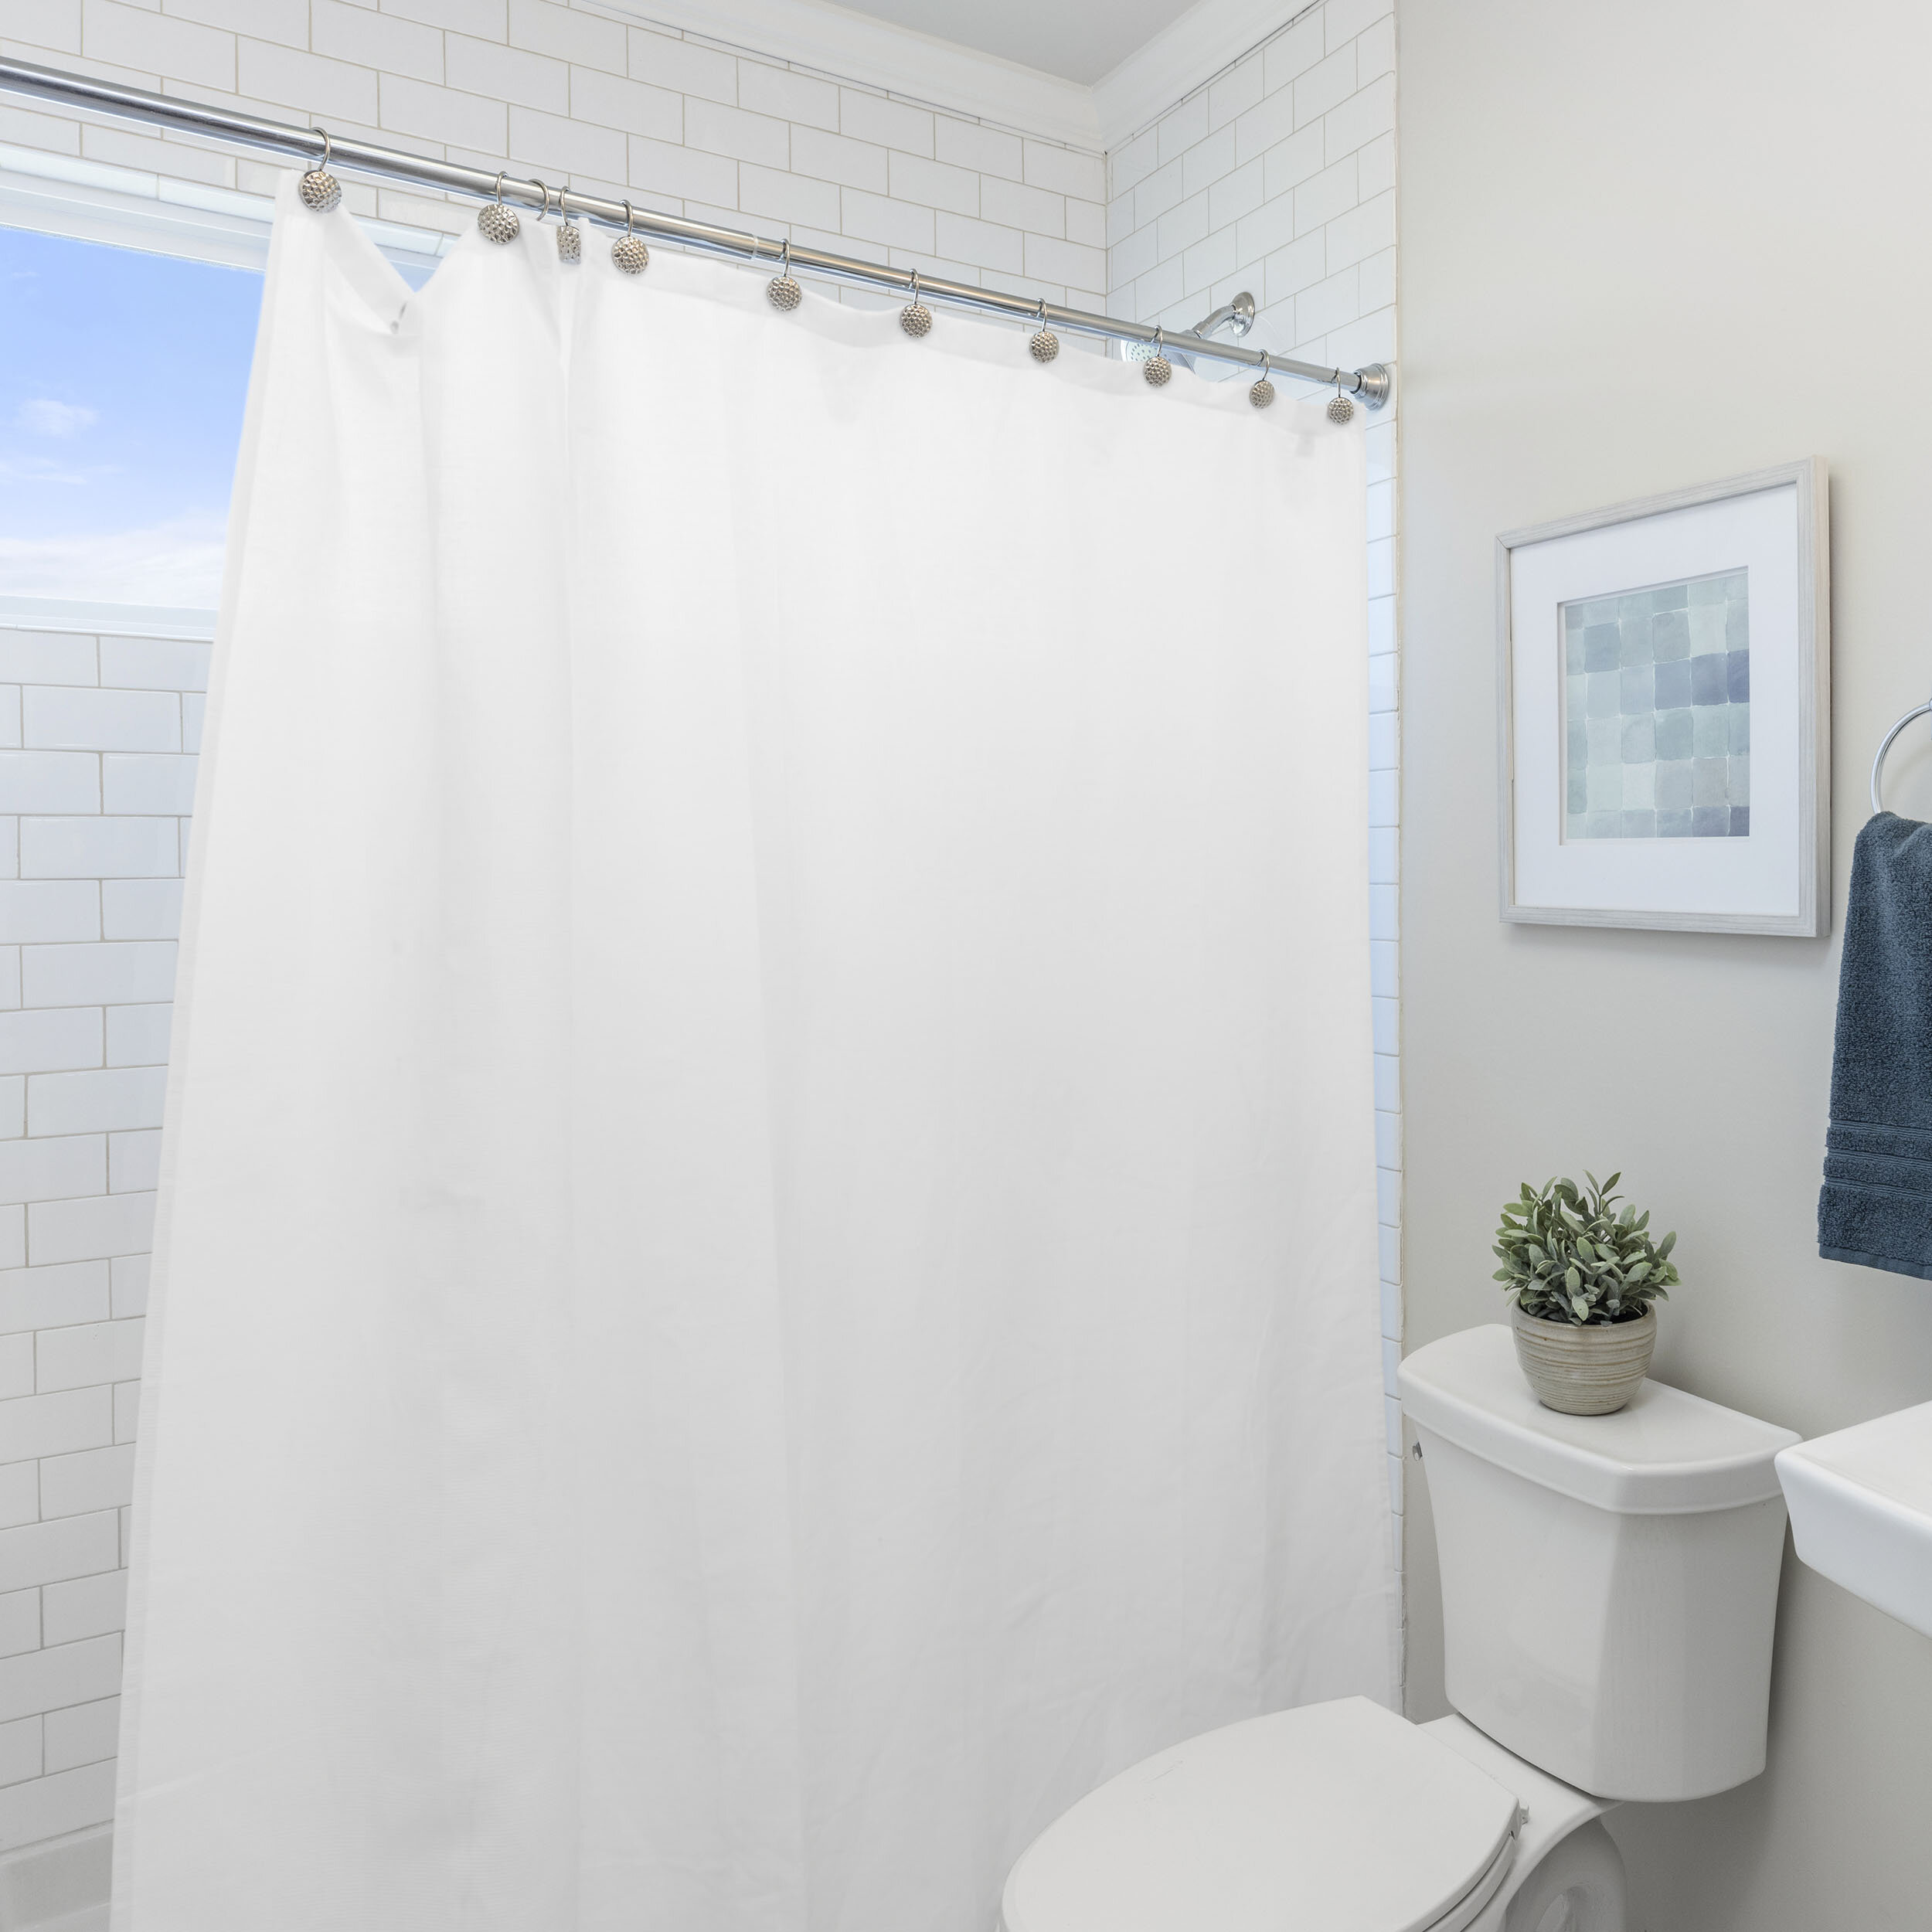 Vinyl Water Mildew Resistant Hotel Quality. Bathroom Shower Curtain Liner 